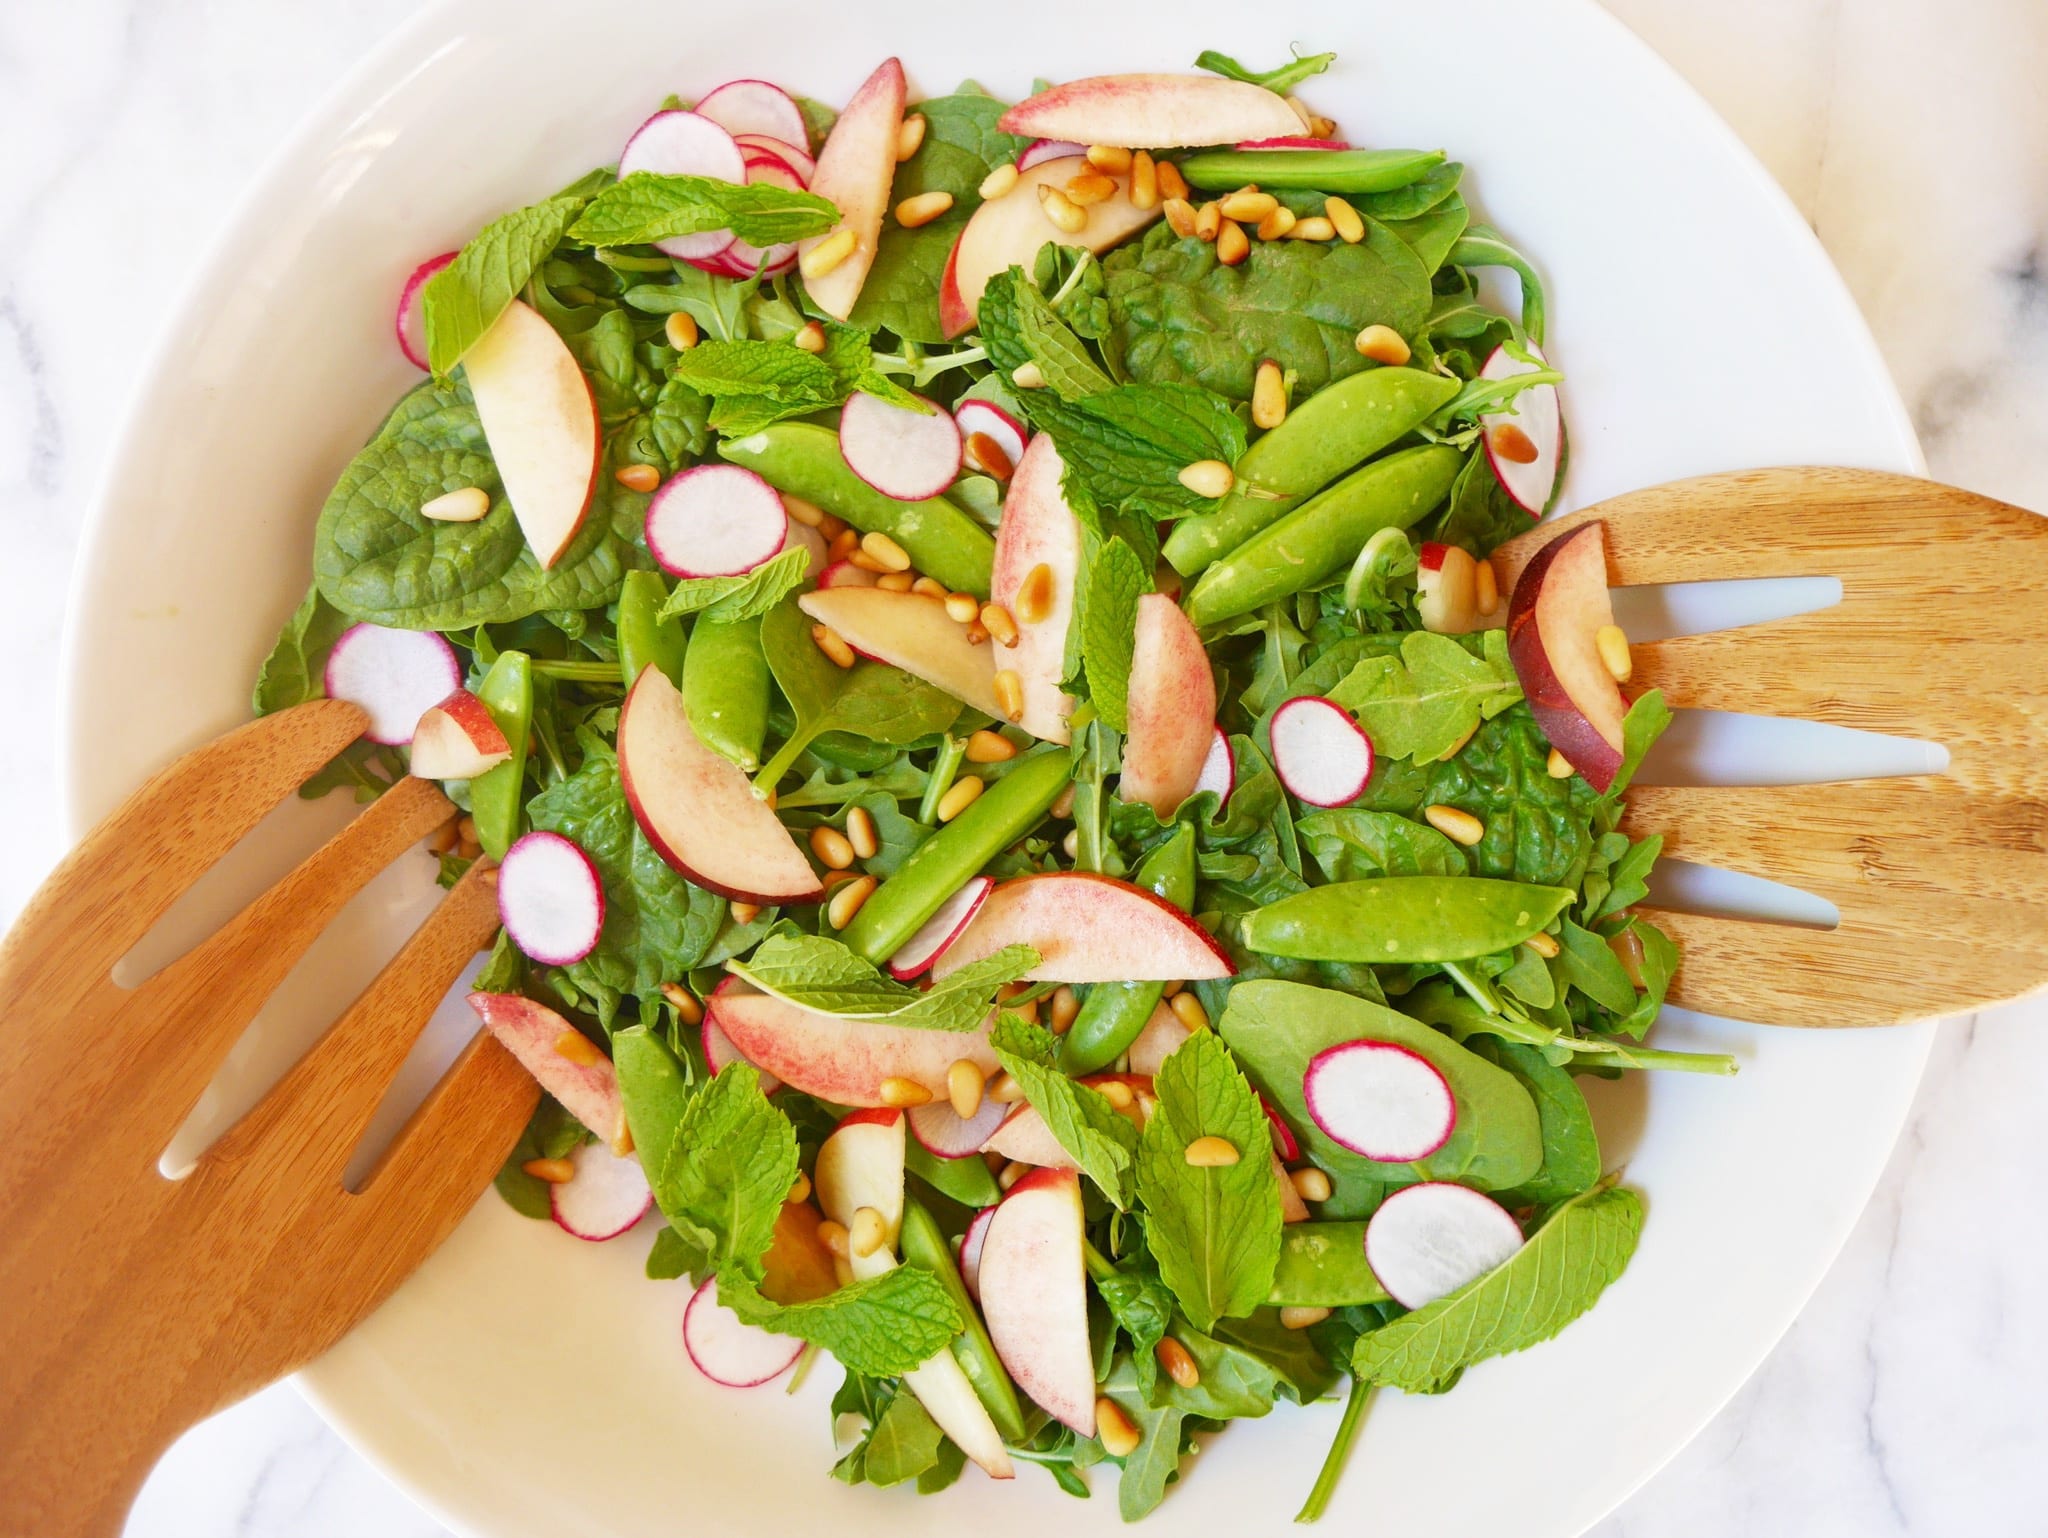 Summer Salad Brings The Best Of The Season